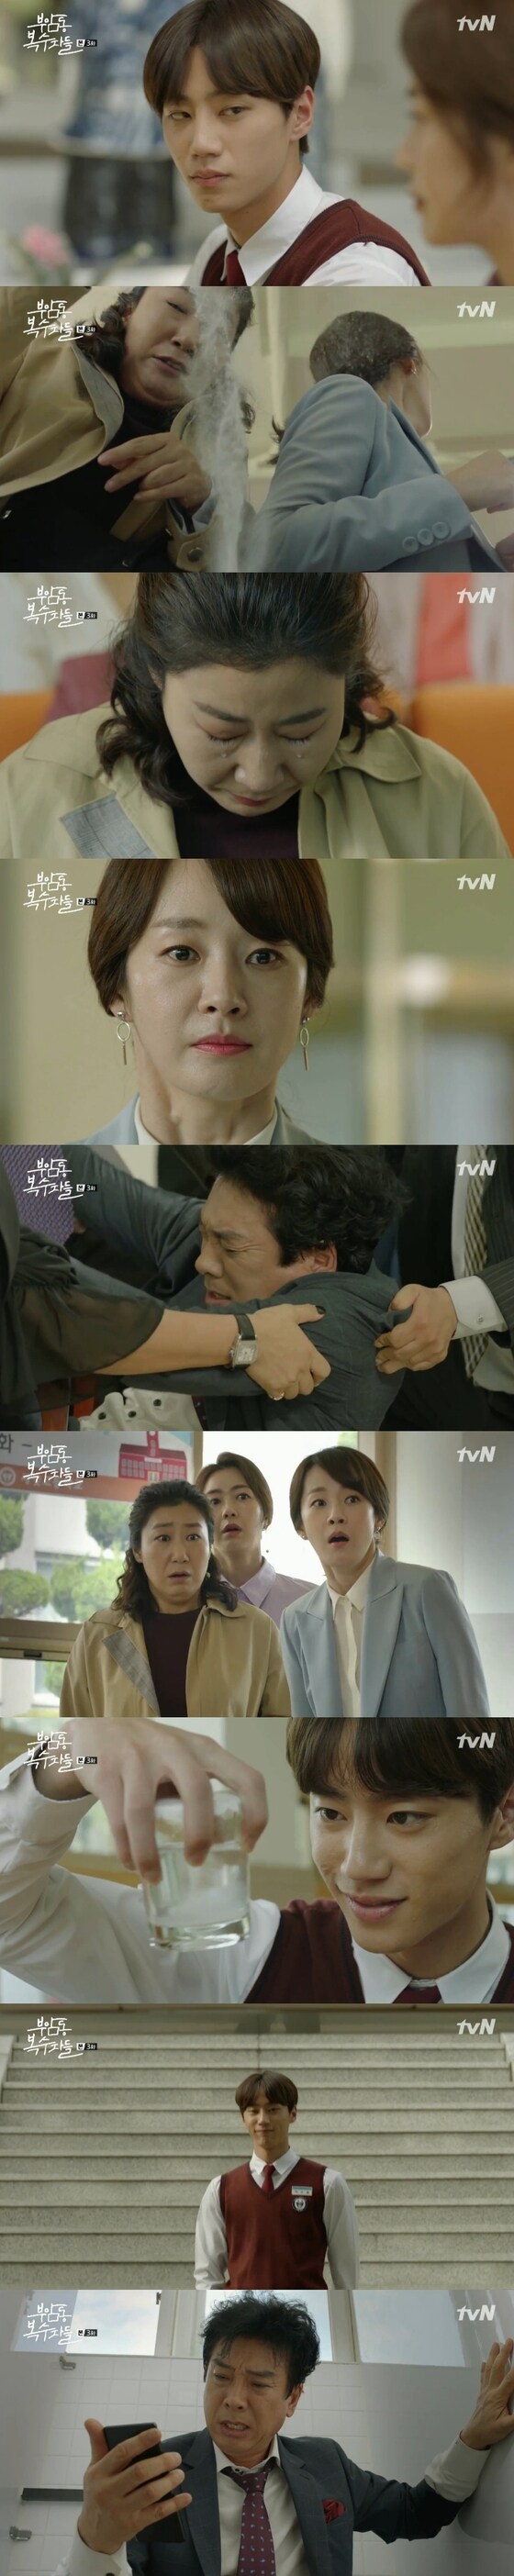 tvN 부암동 복수자들 © News1